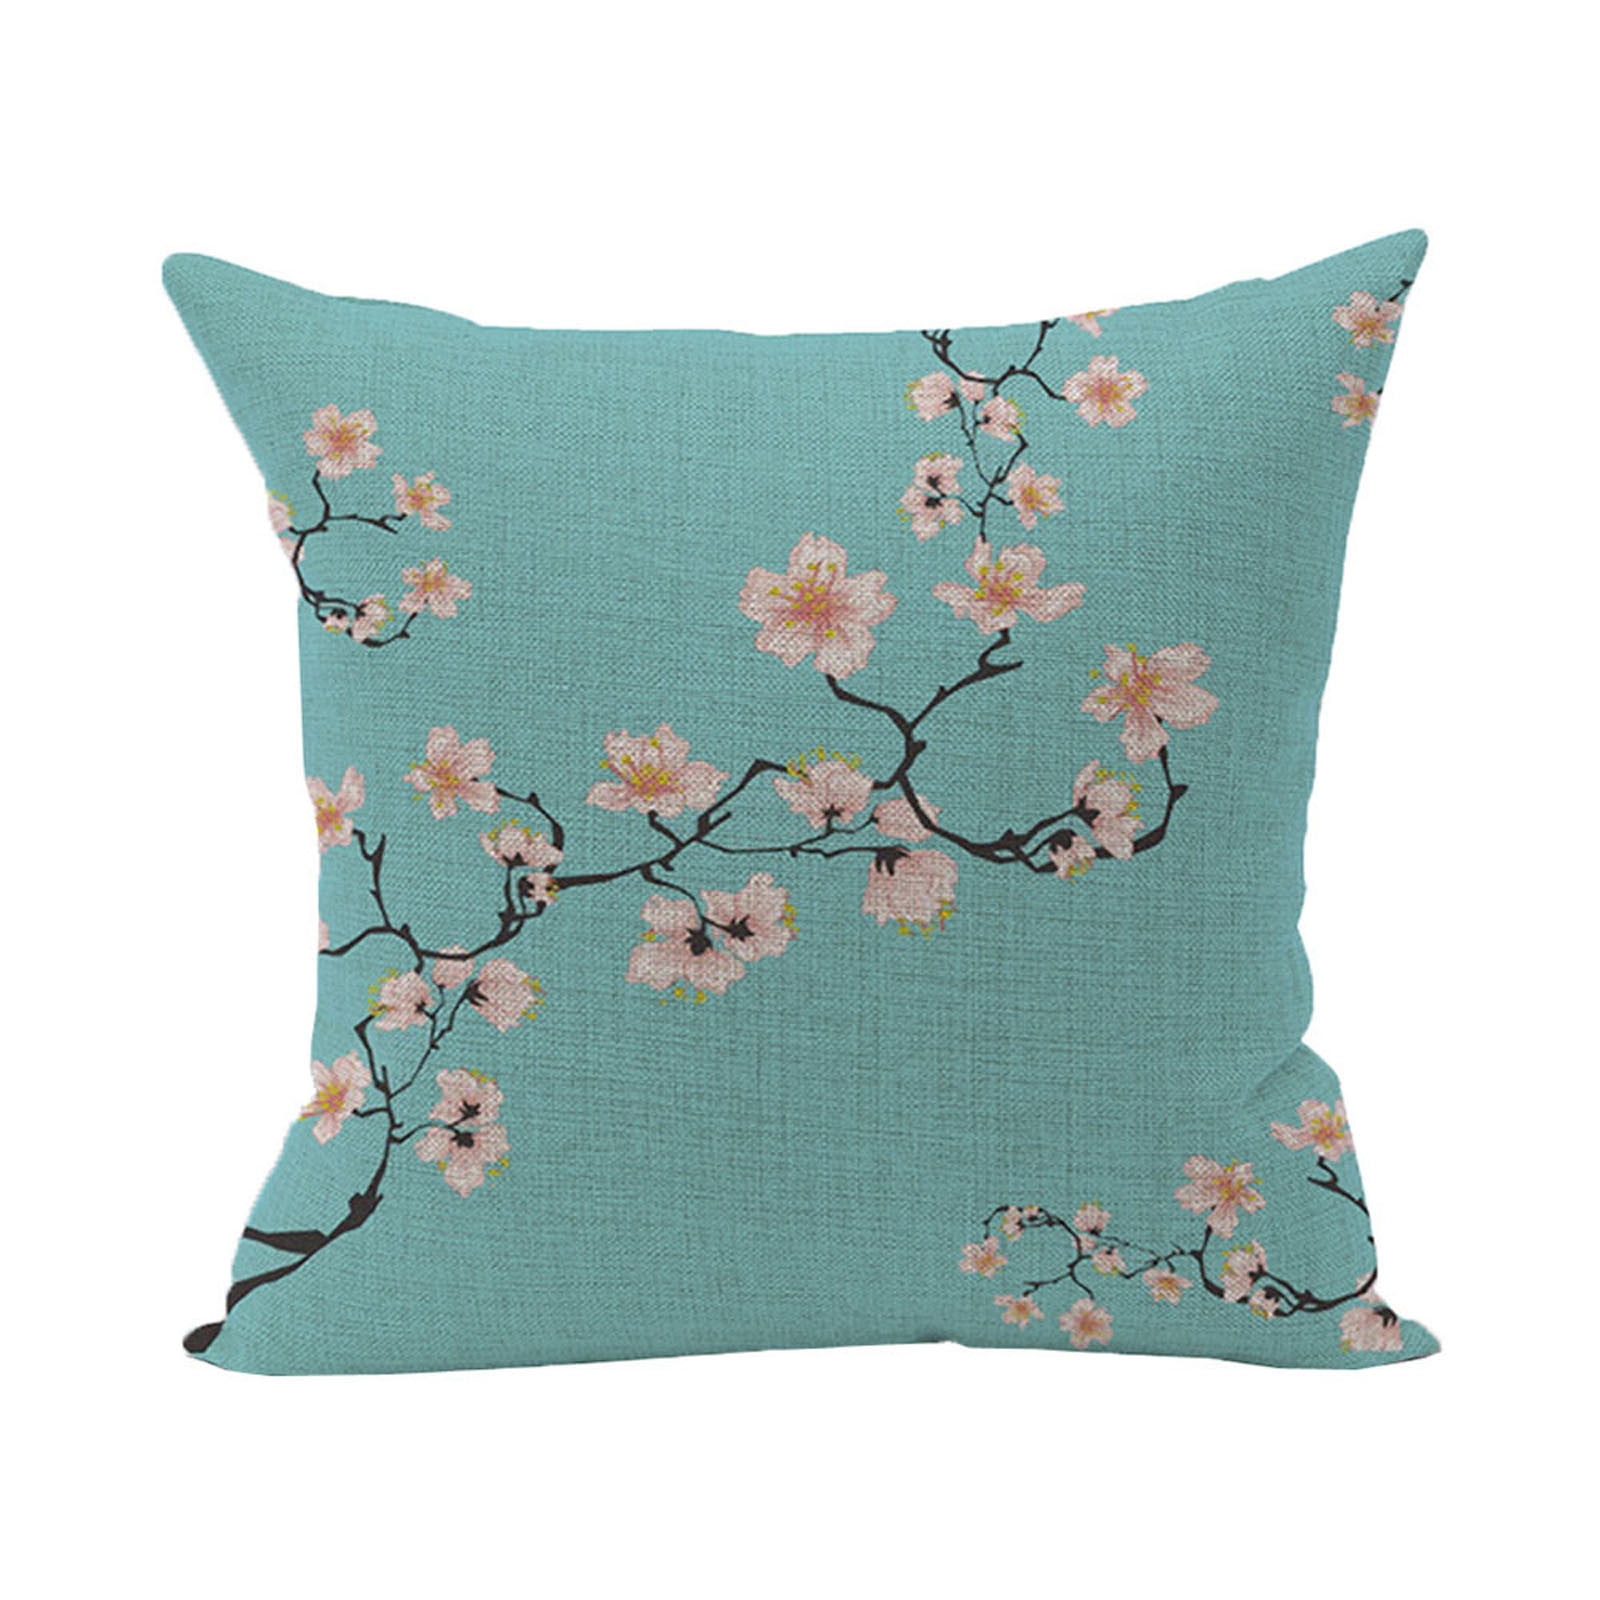 Blue Vintage Flower Cotton Linen Throw Pillowcase Waist Cushion Cover Home Decor 